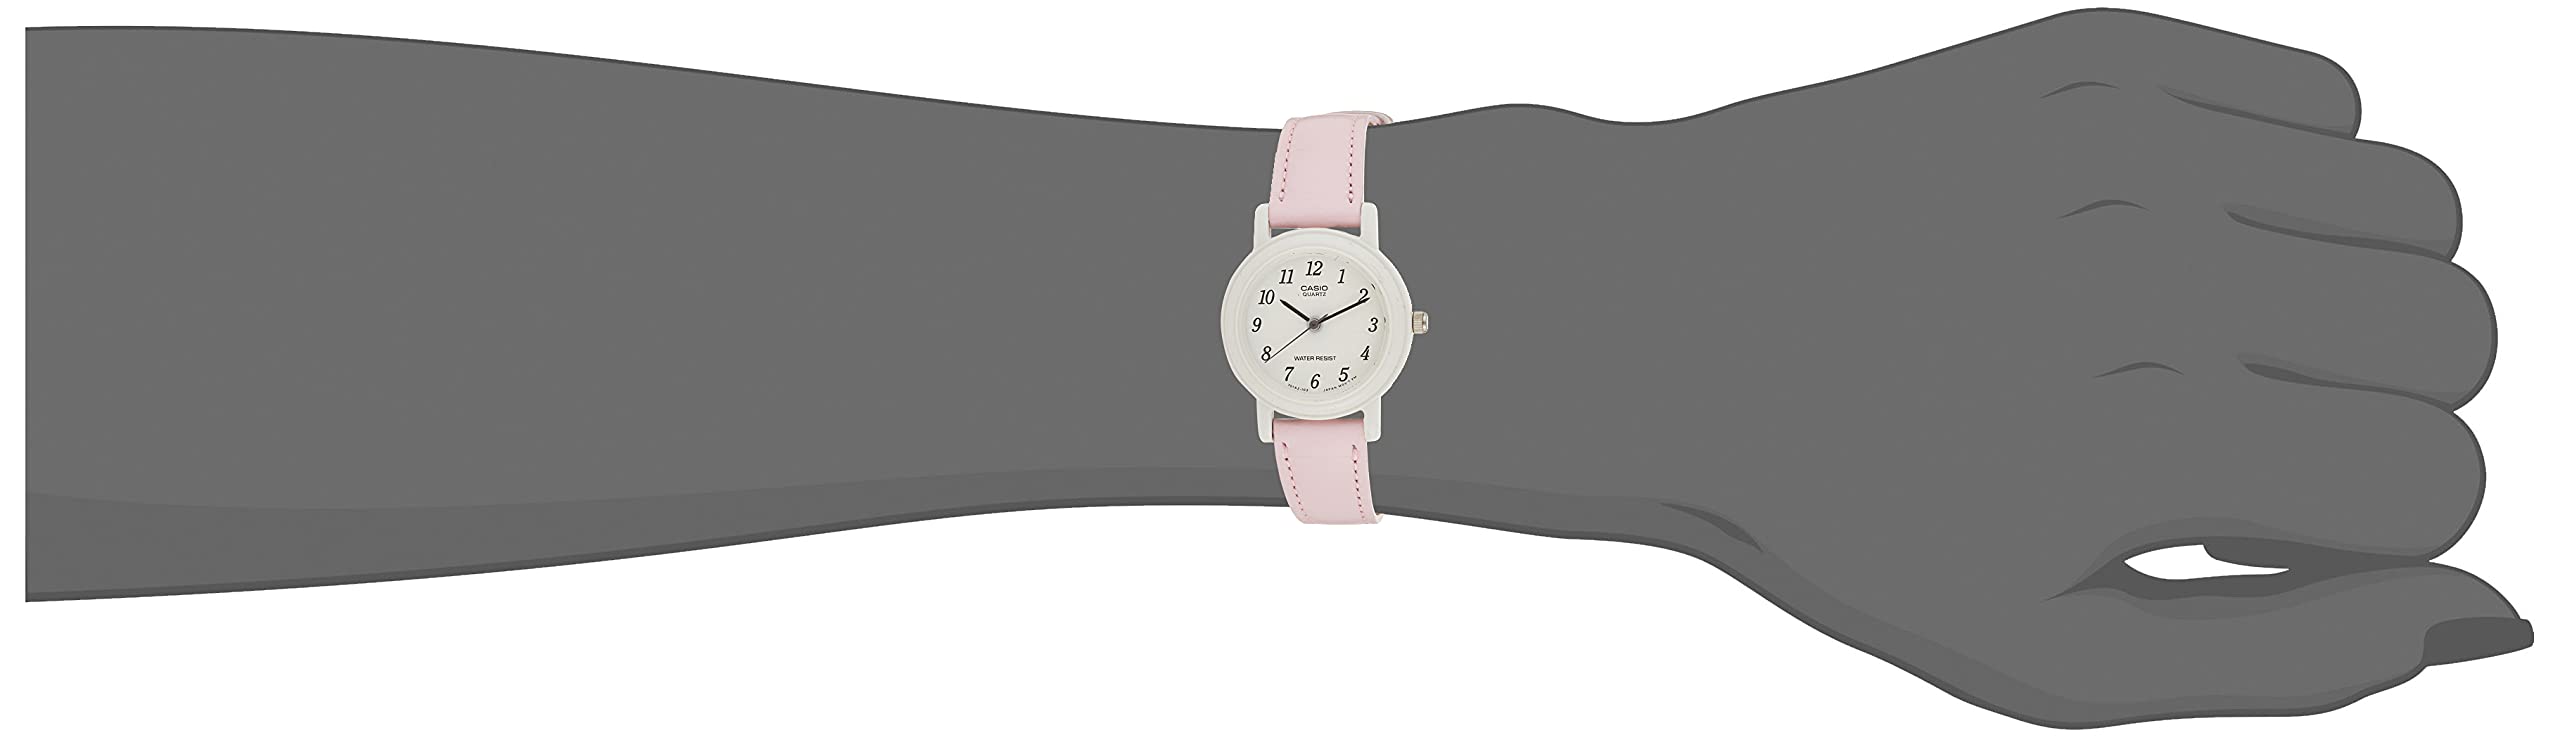 Casio Women's Light Pink Genuine Leather Analog Watch LQ139L-4B1